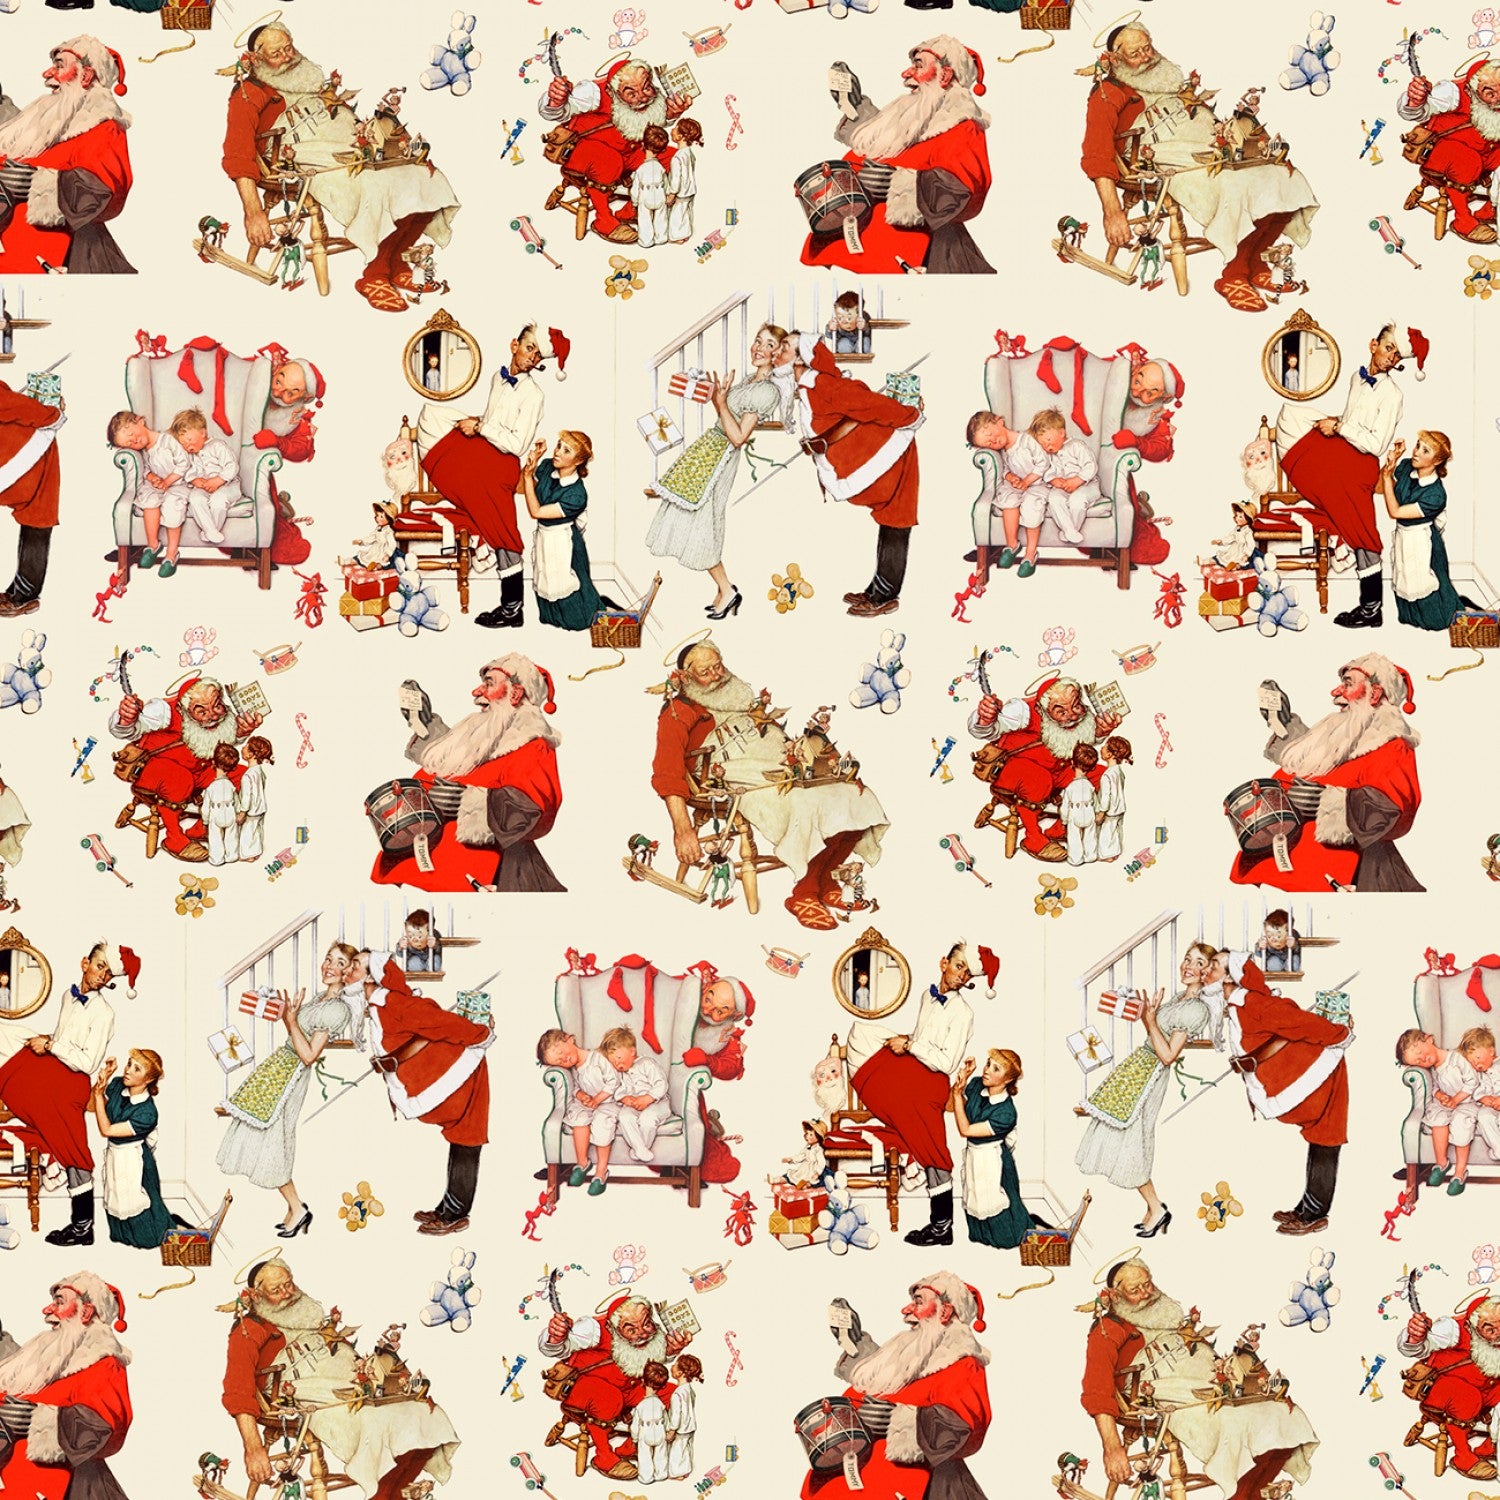 Santa Claus Fabric and Christmas Fabric Pre-cuts